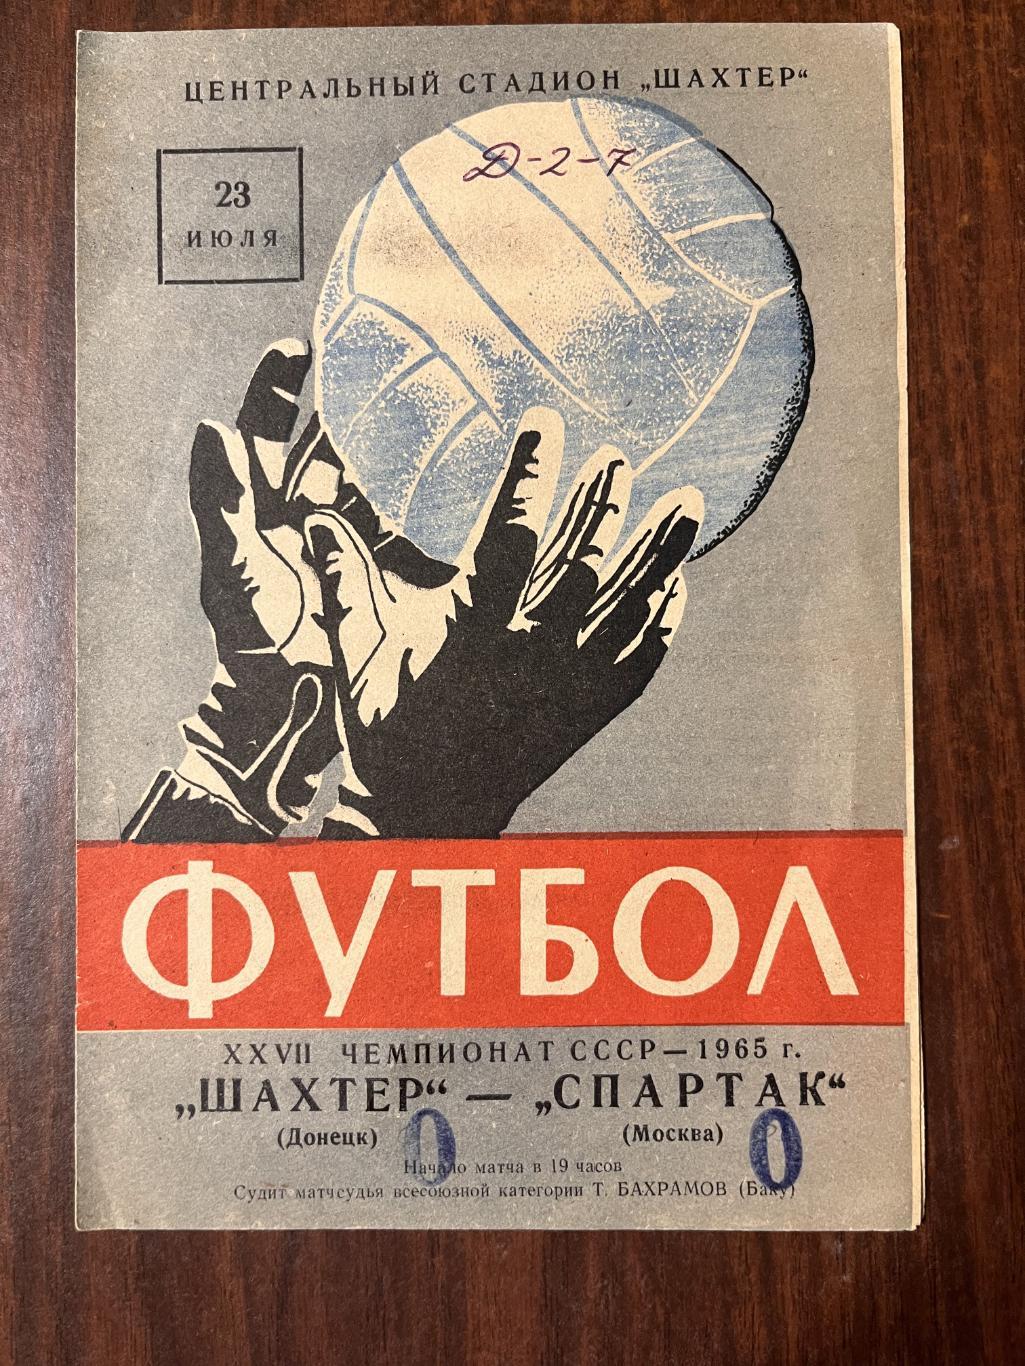 Шахтер -Спартак Москва 23 июля 1965